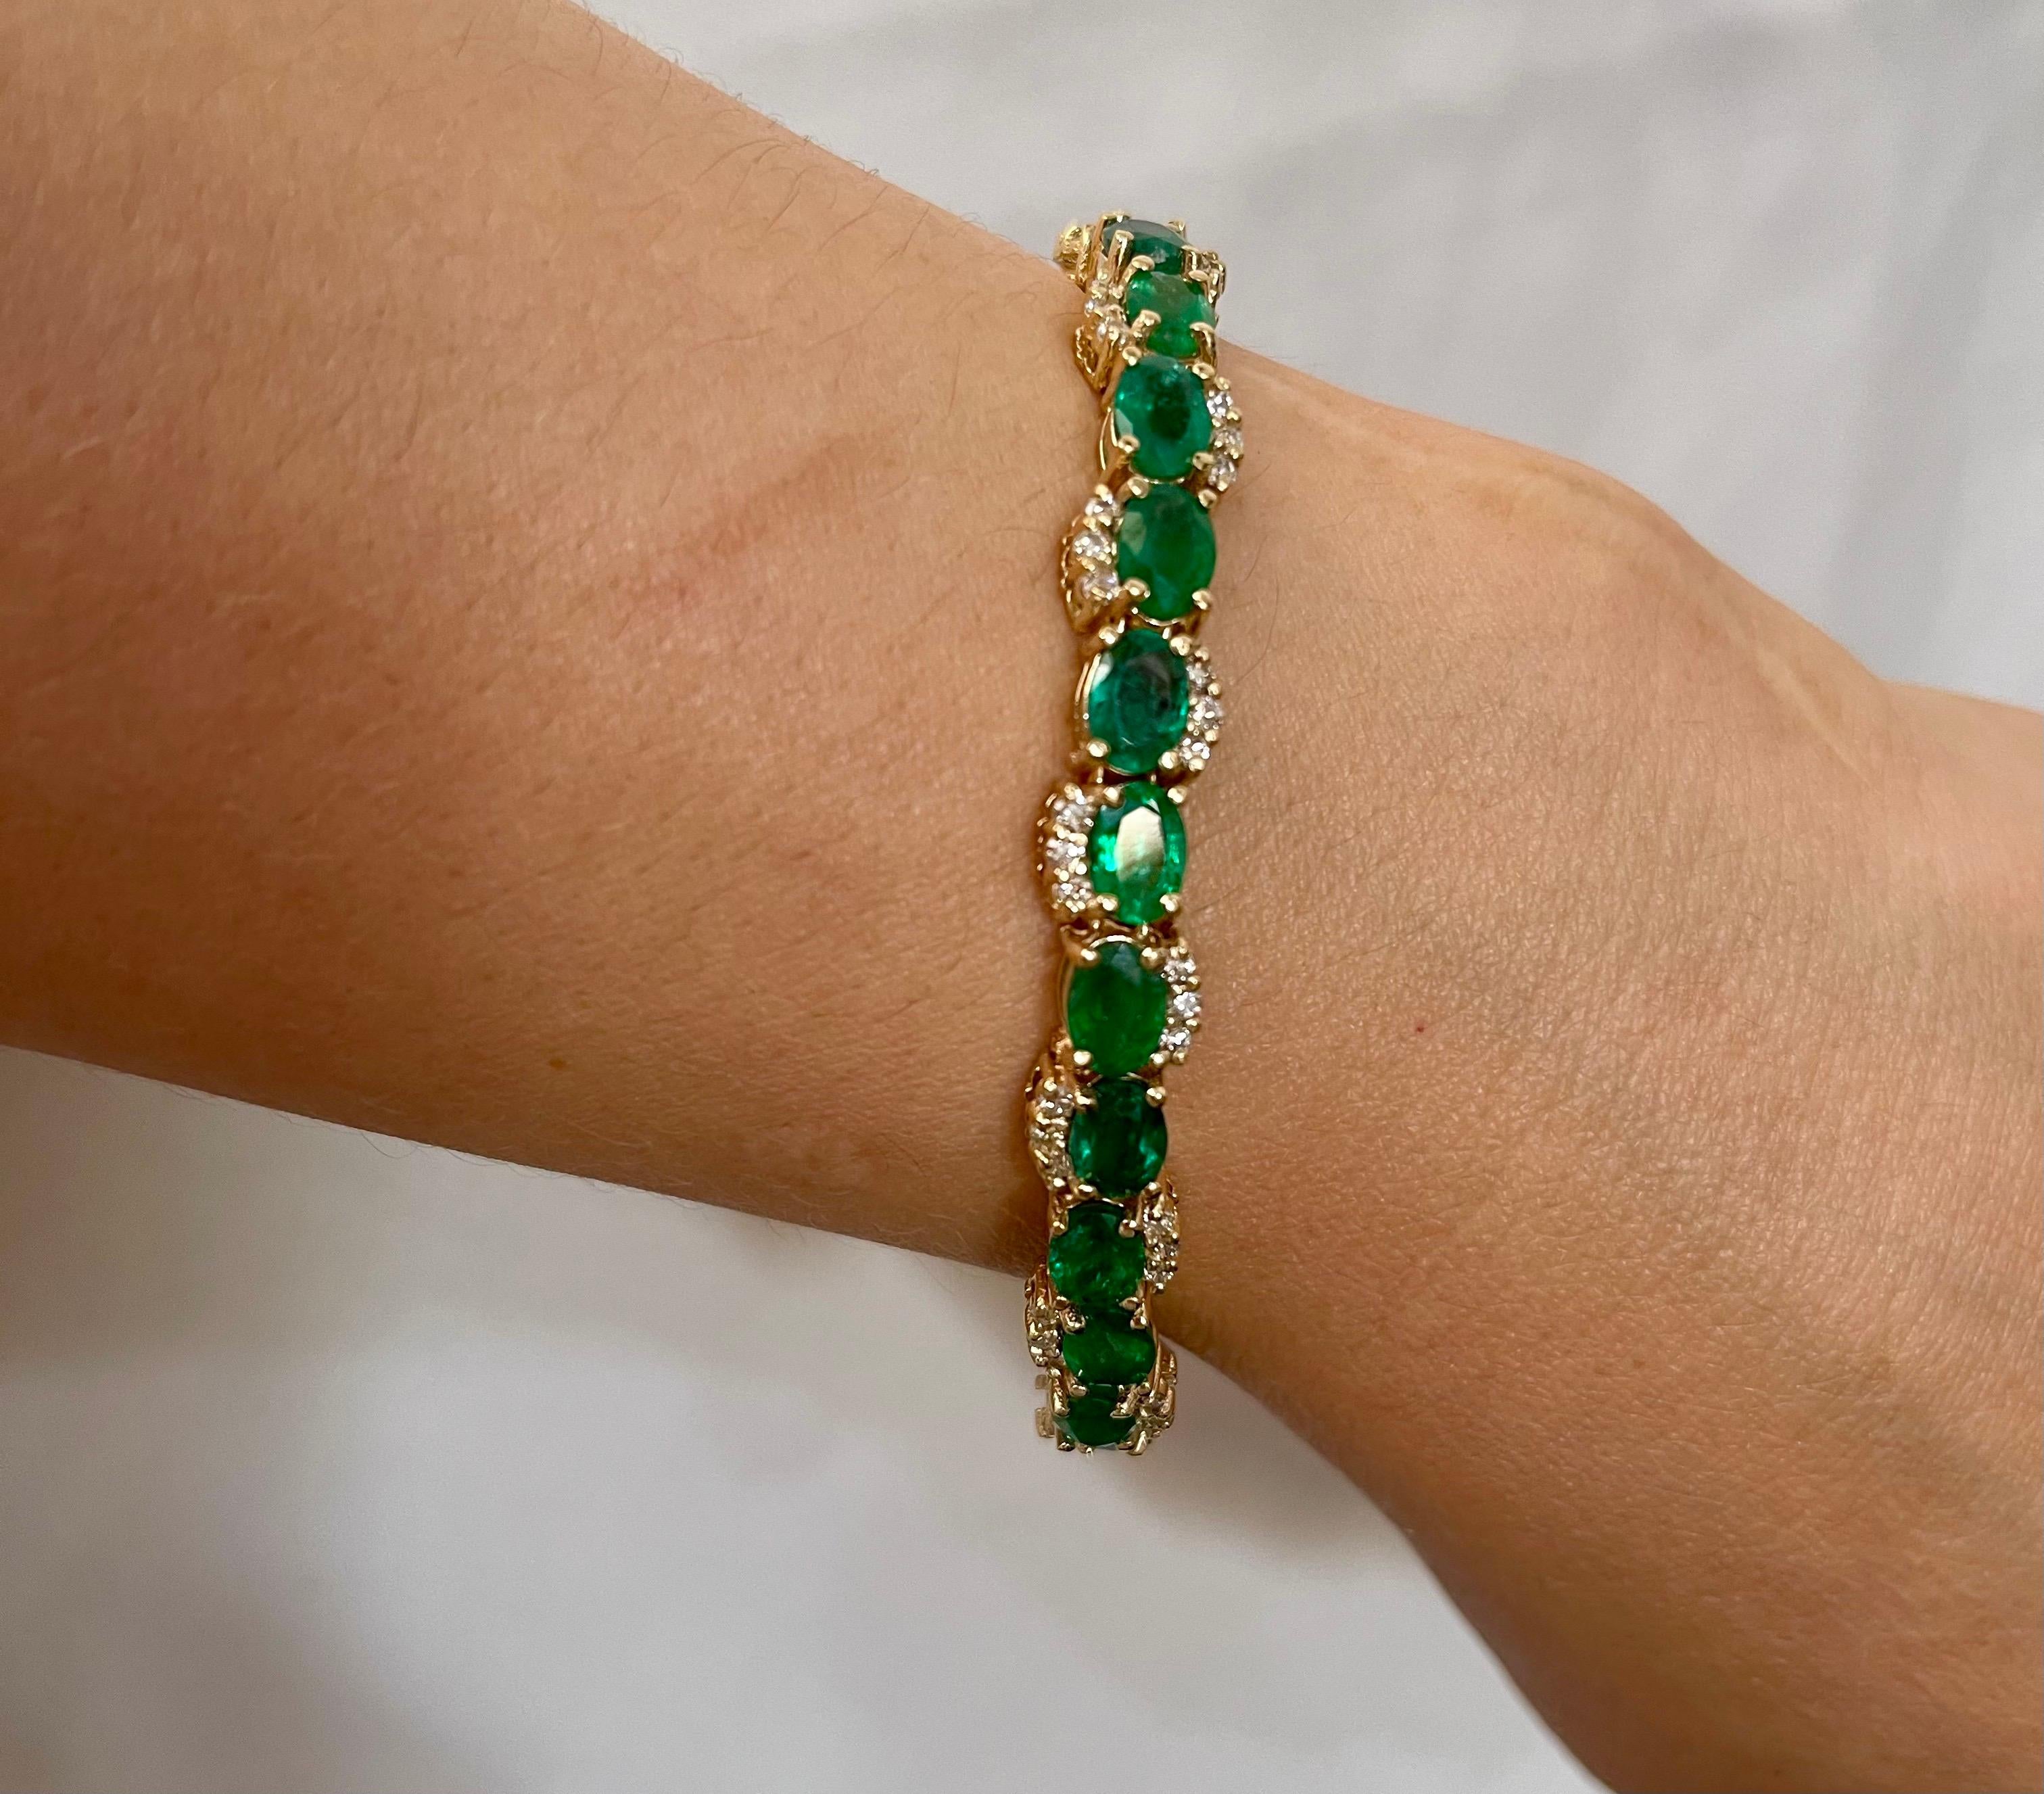 21 Carat Natural Brazil Emerald & 2.6 Ct Diamond Tennis Bracelet 14 Karat Y Gold For Sale 6